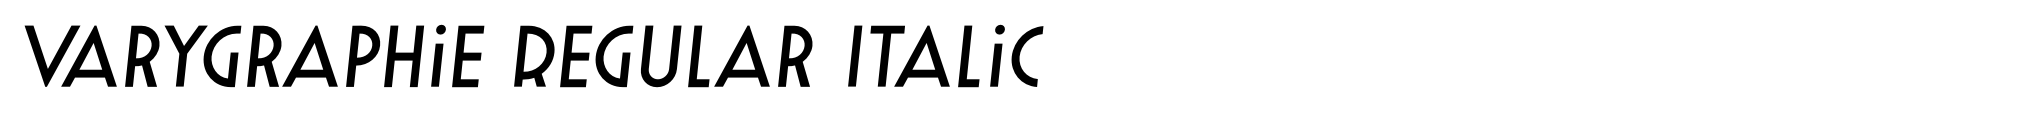 Varygraphie Regular Italic image